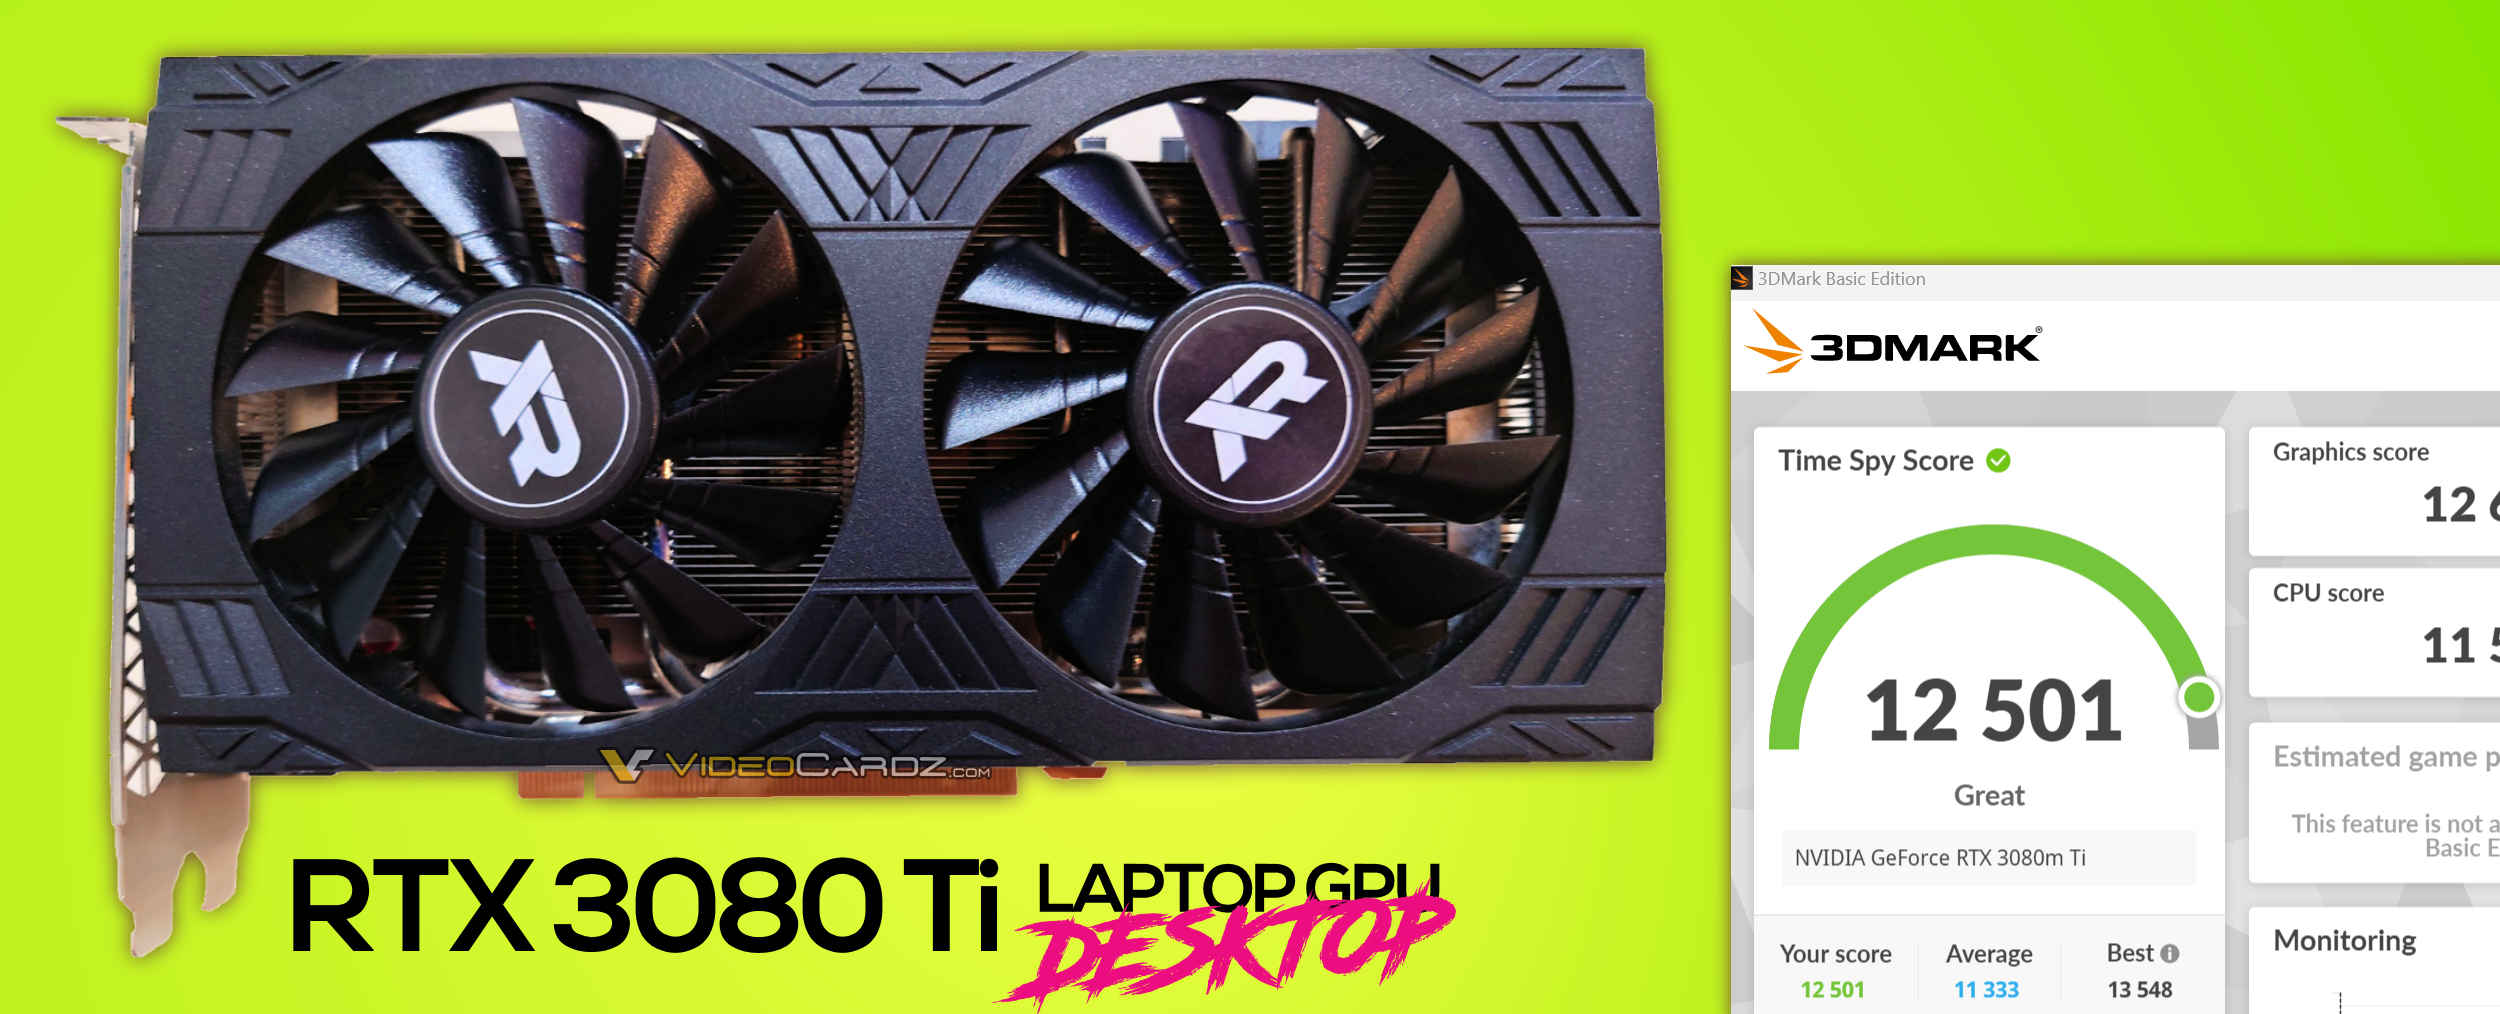 GeForce RTX 3080 Ti mobile GPU turned desktop has been tested in 3DMark 